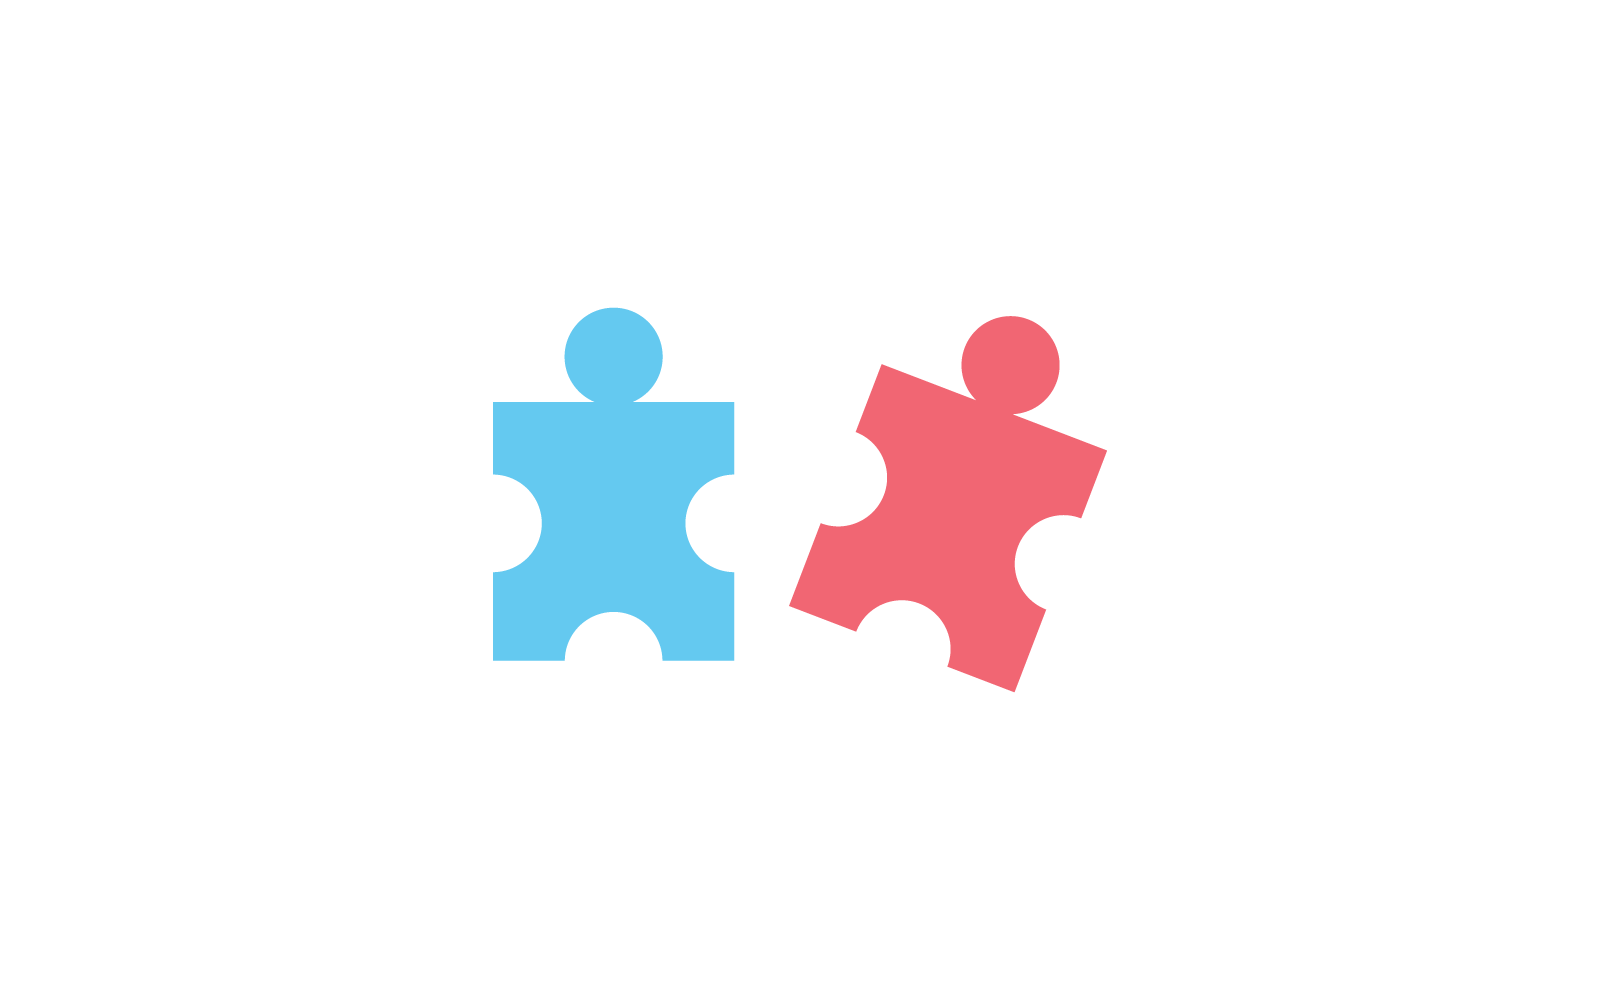 People puzzle illustration vector design